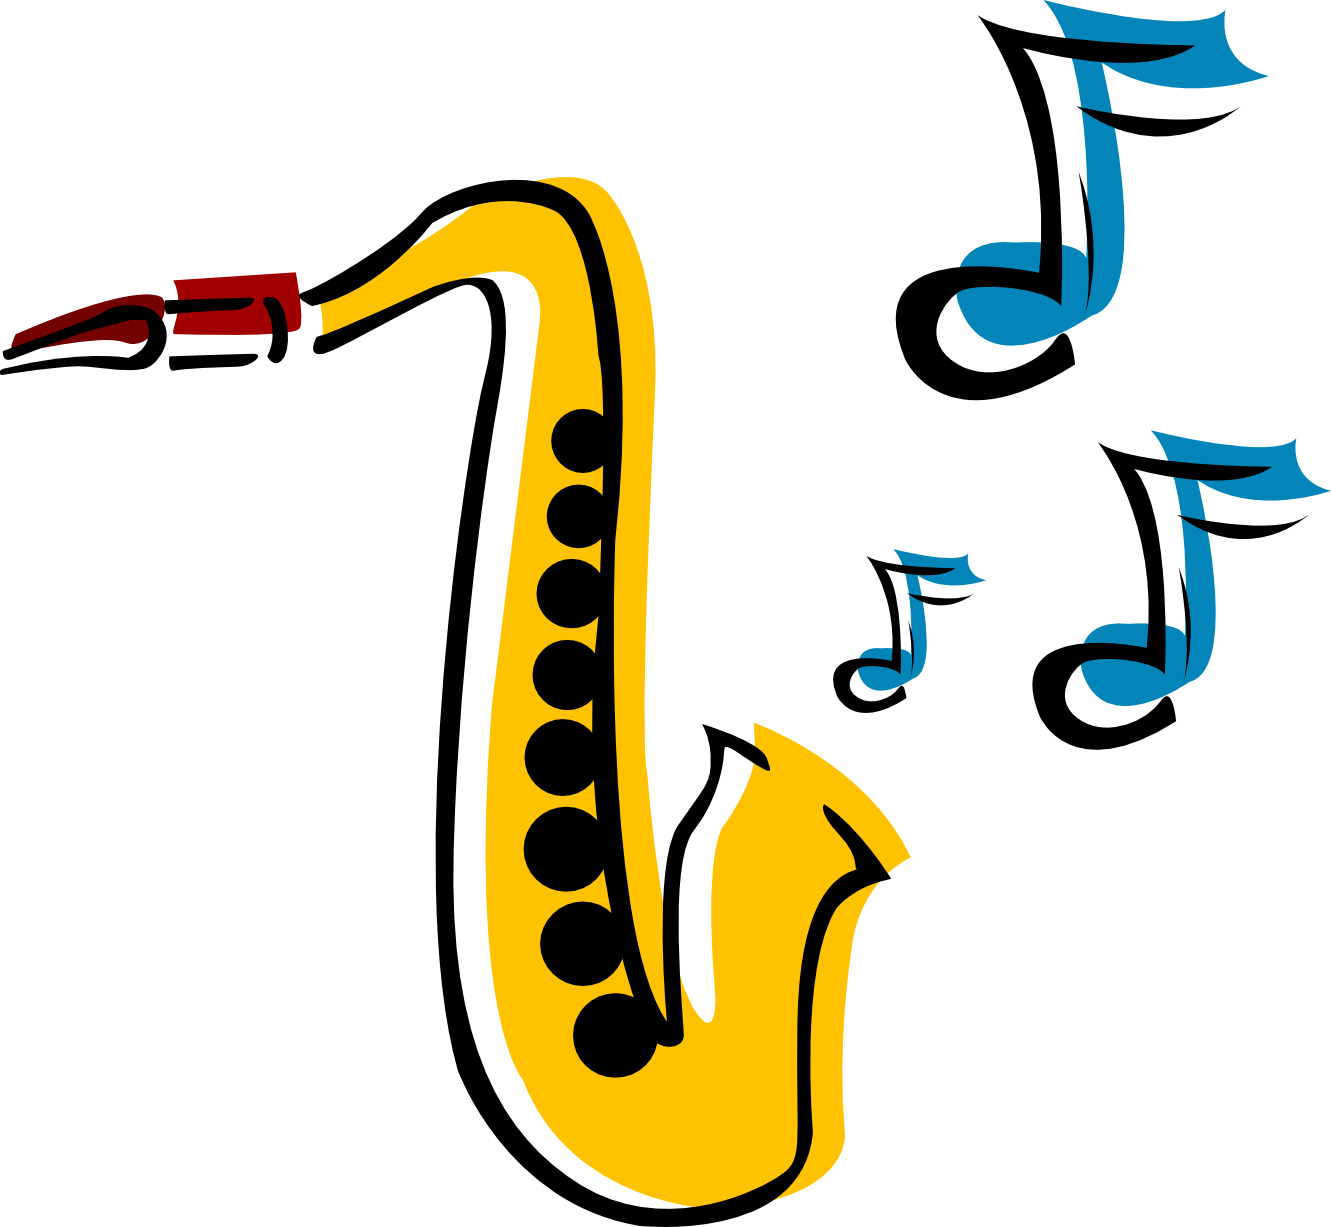 Saxophone Clip Art